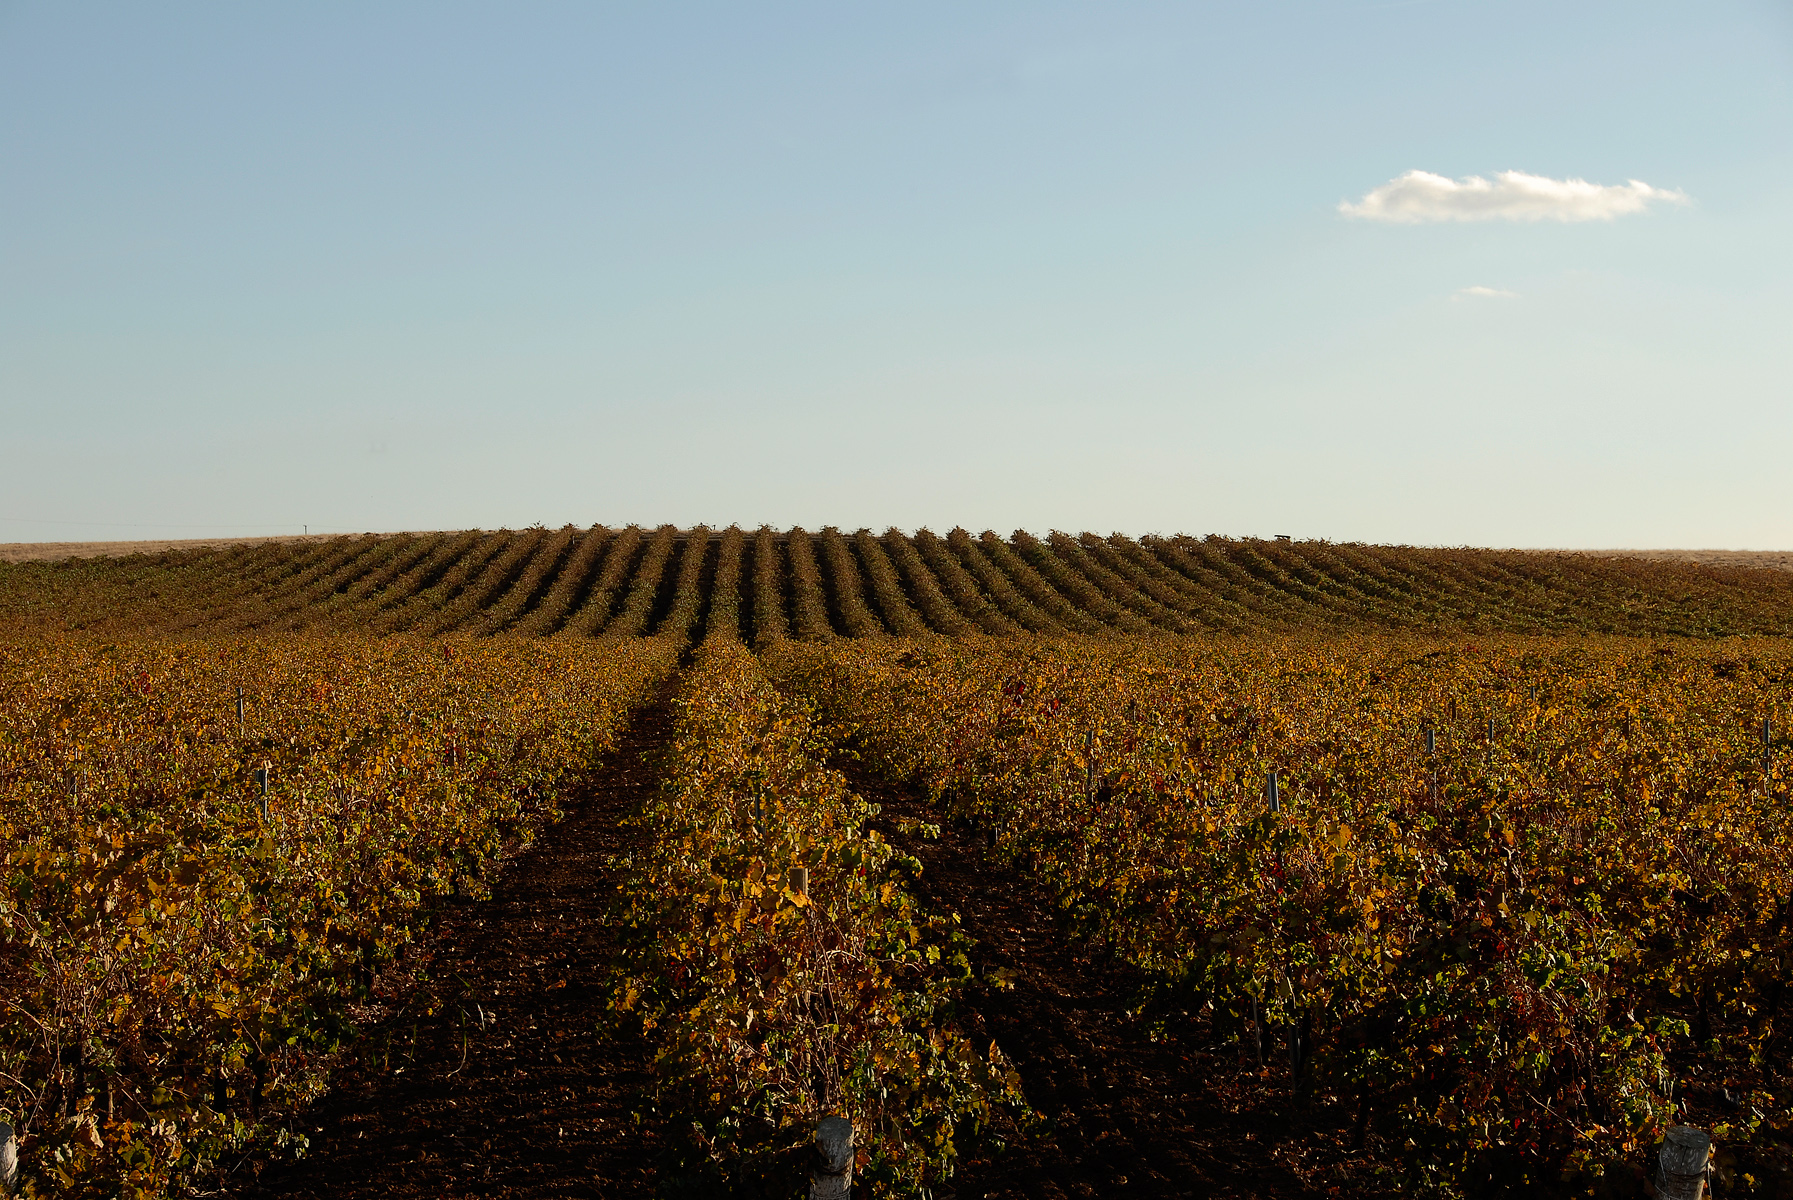 The vineyard photo